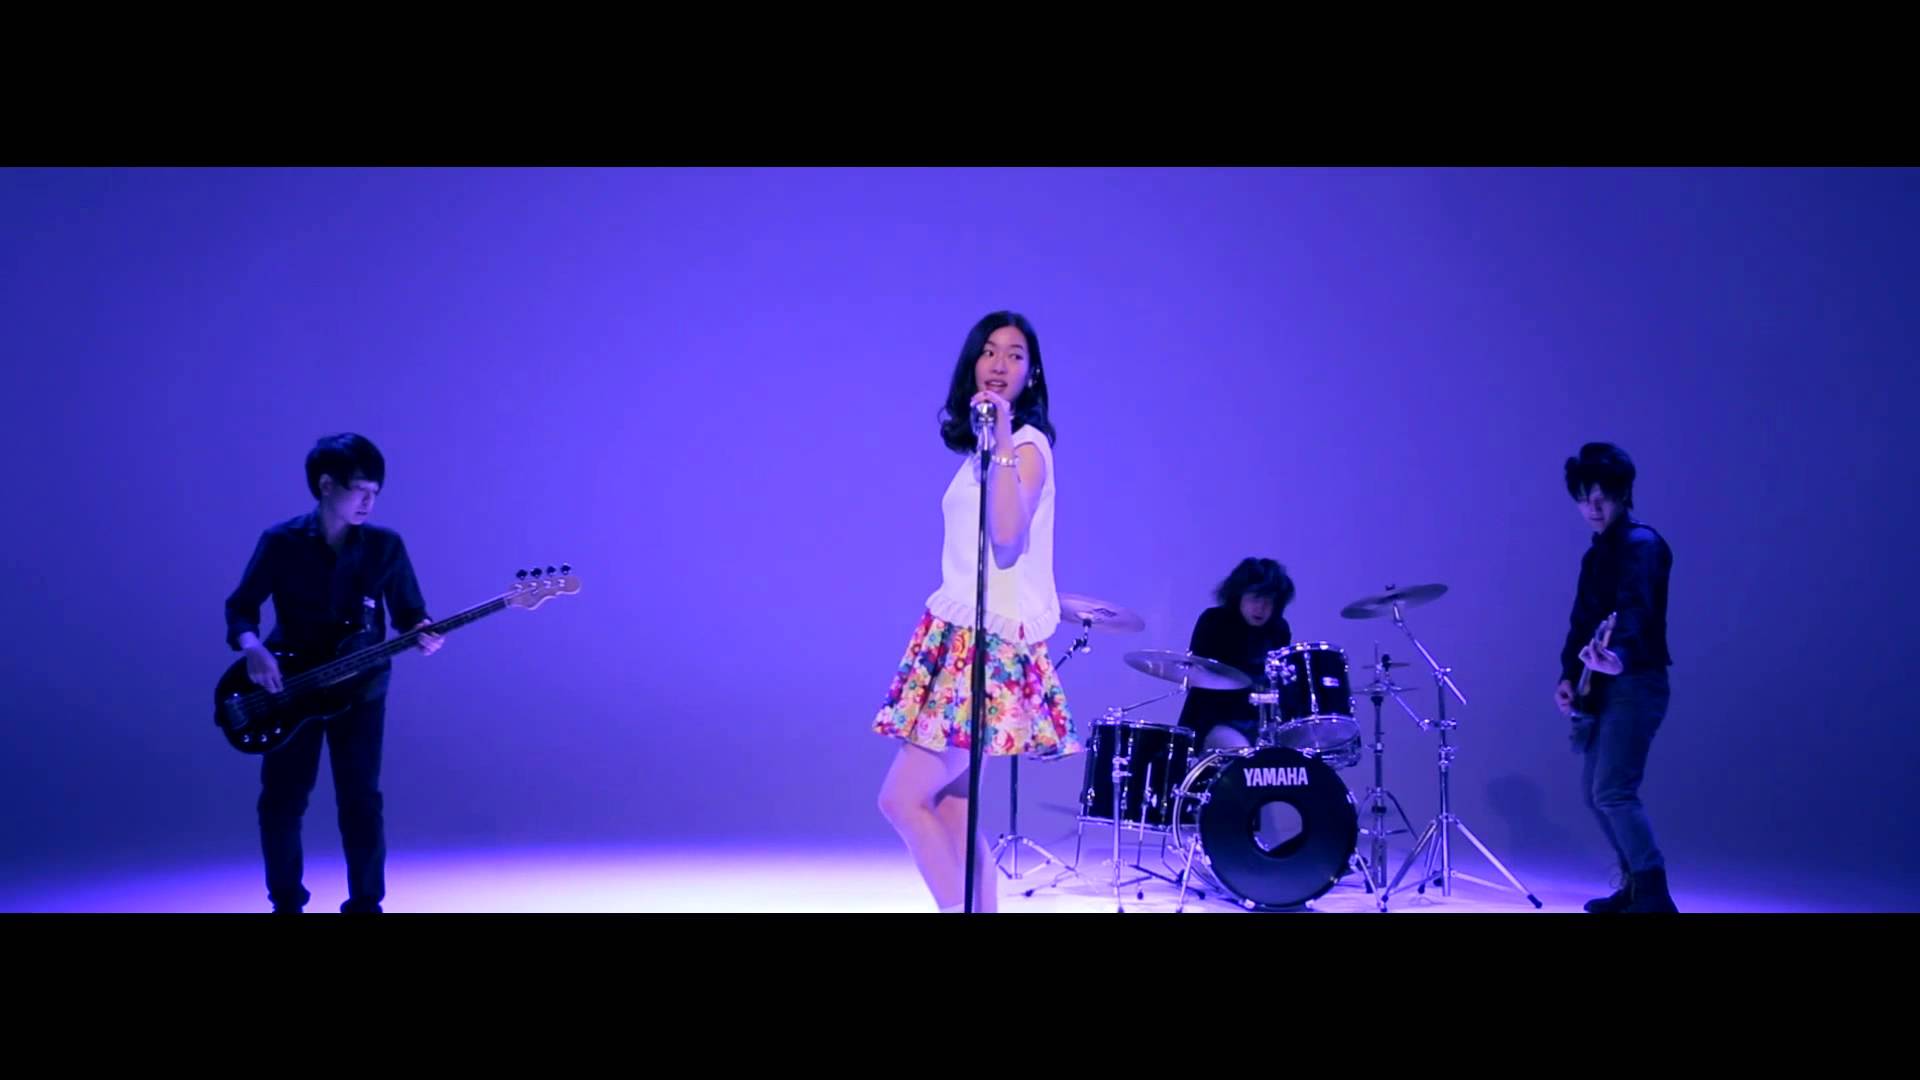 Hara Yumi “improvisation” musik video